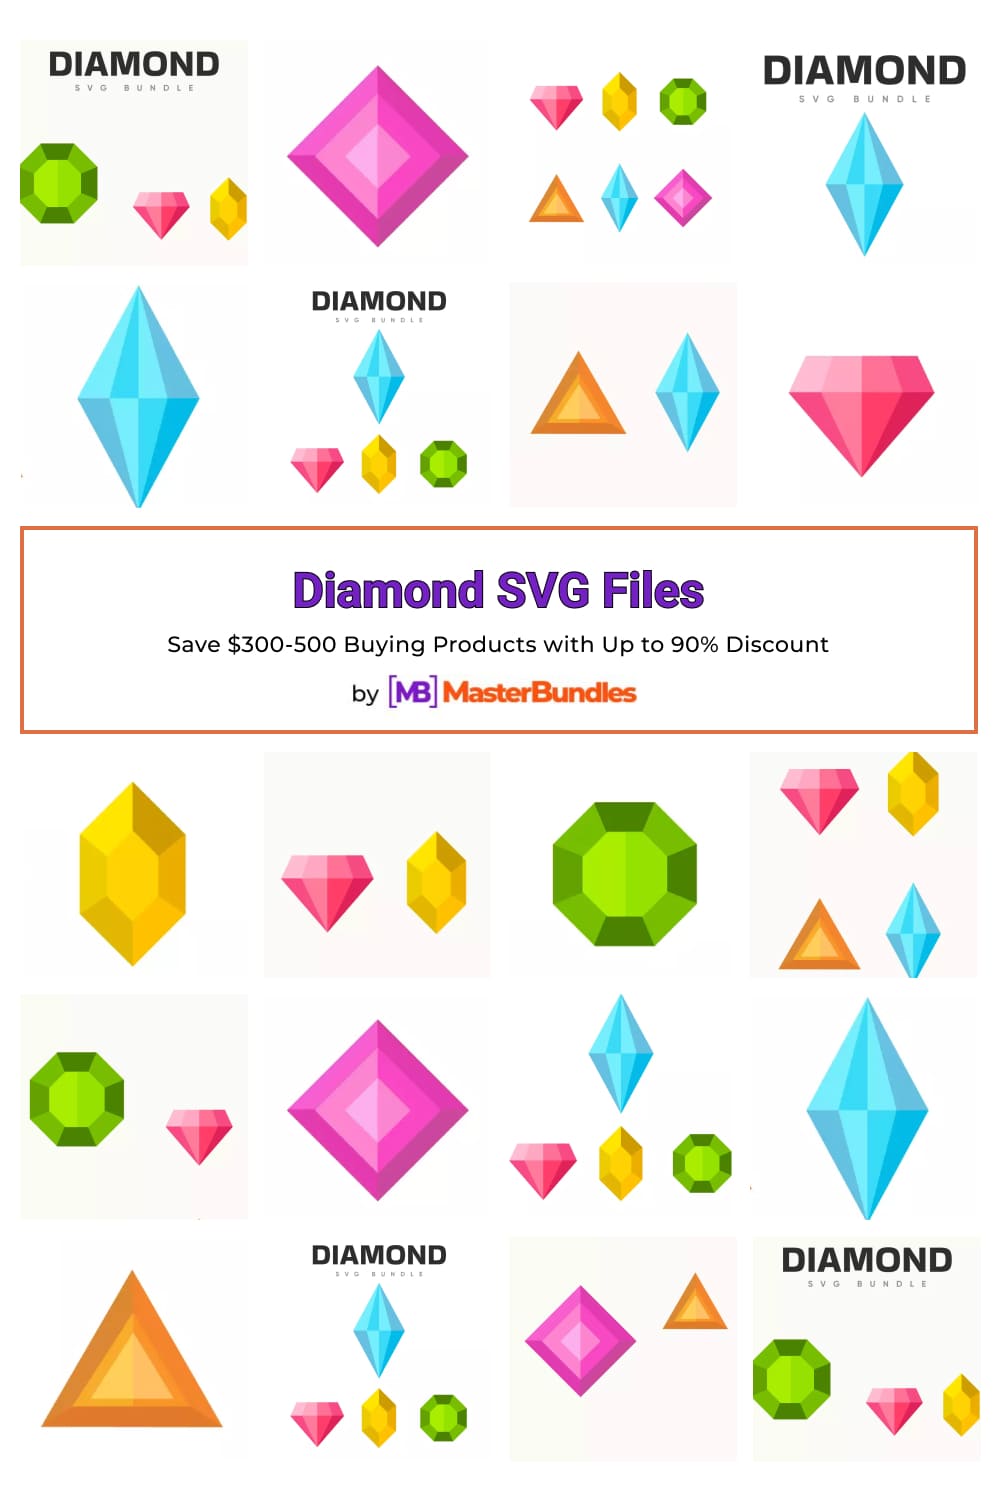 Diamond SVG Files Pinterest image.